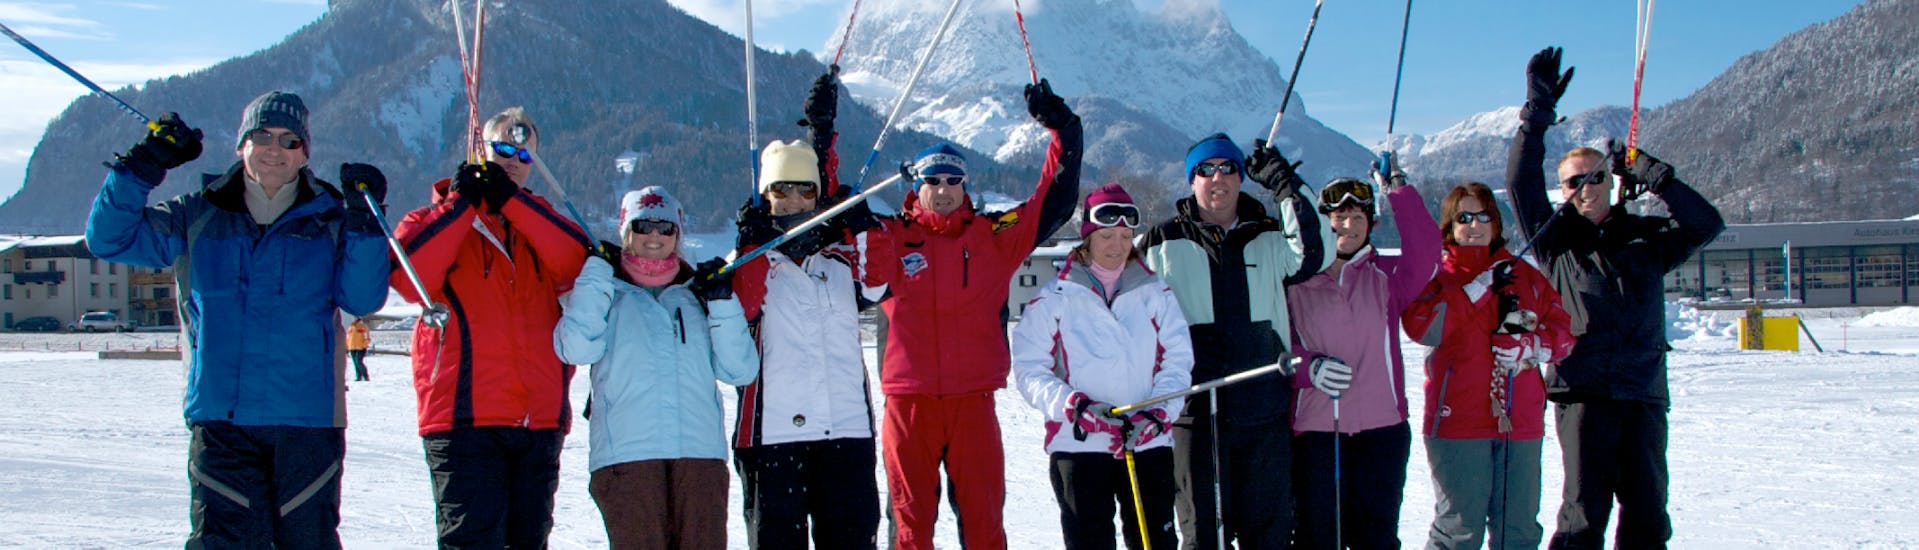 Adult Ski Lessons for Advanced Skiers with Ski School Ski Total Kirchdorf - Hero image